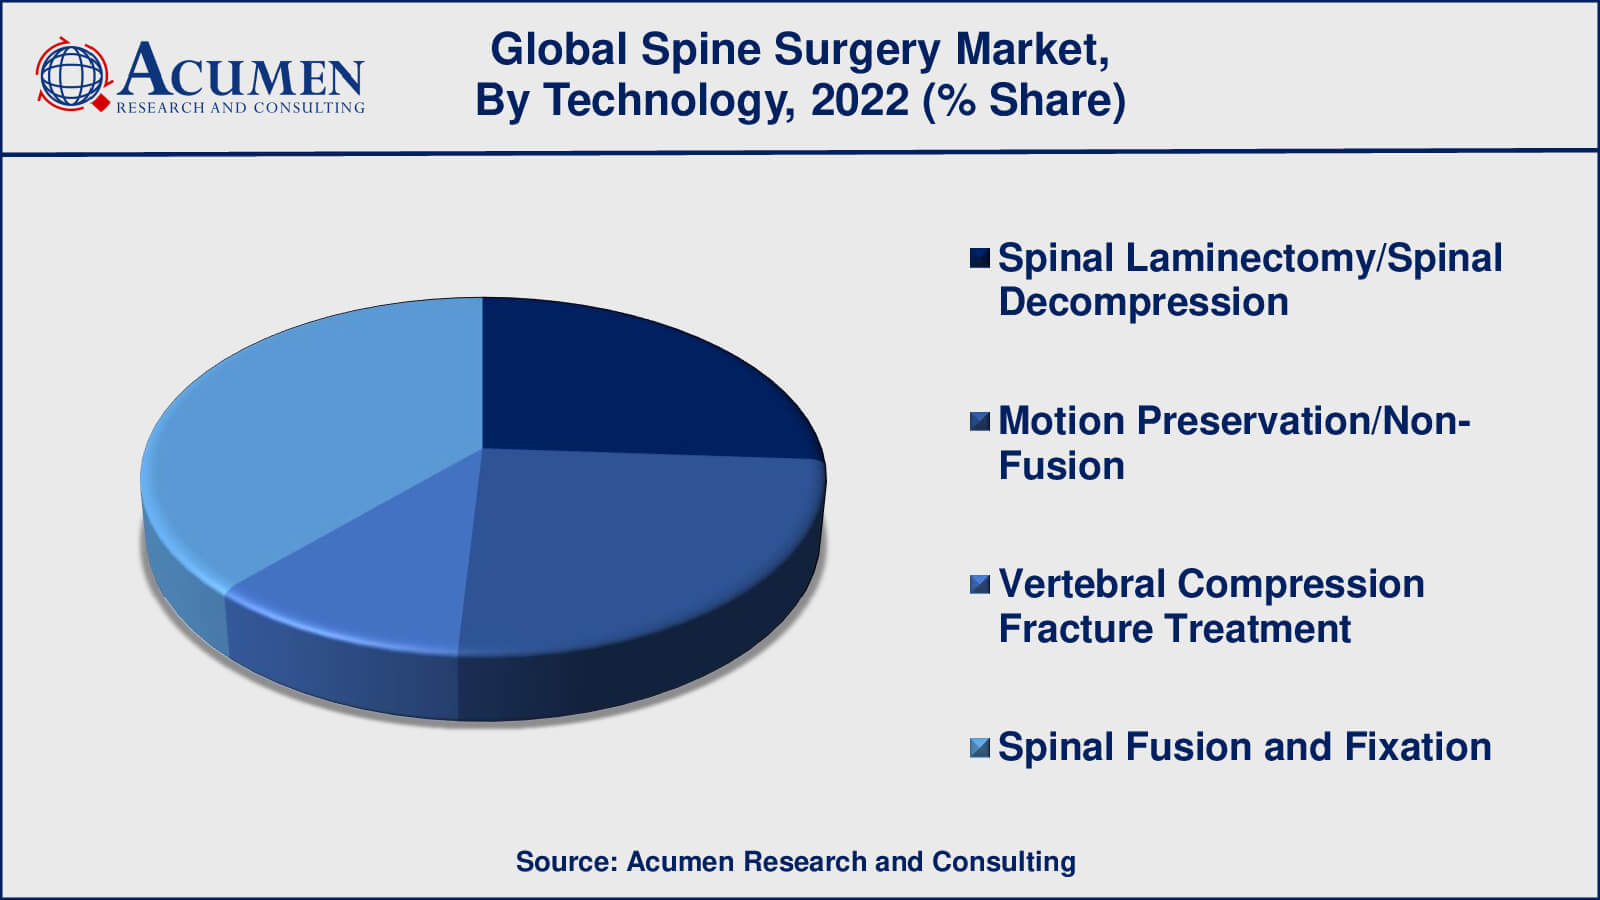 Spine Surgery Market Drivers